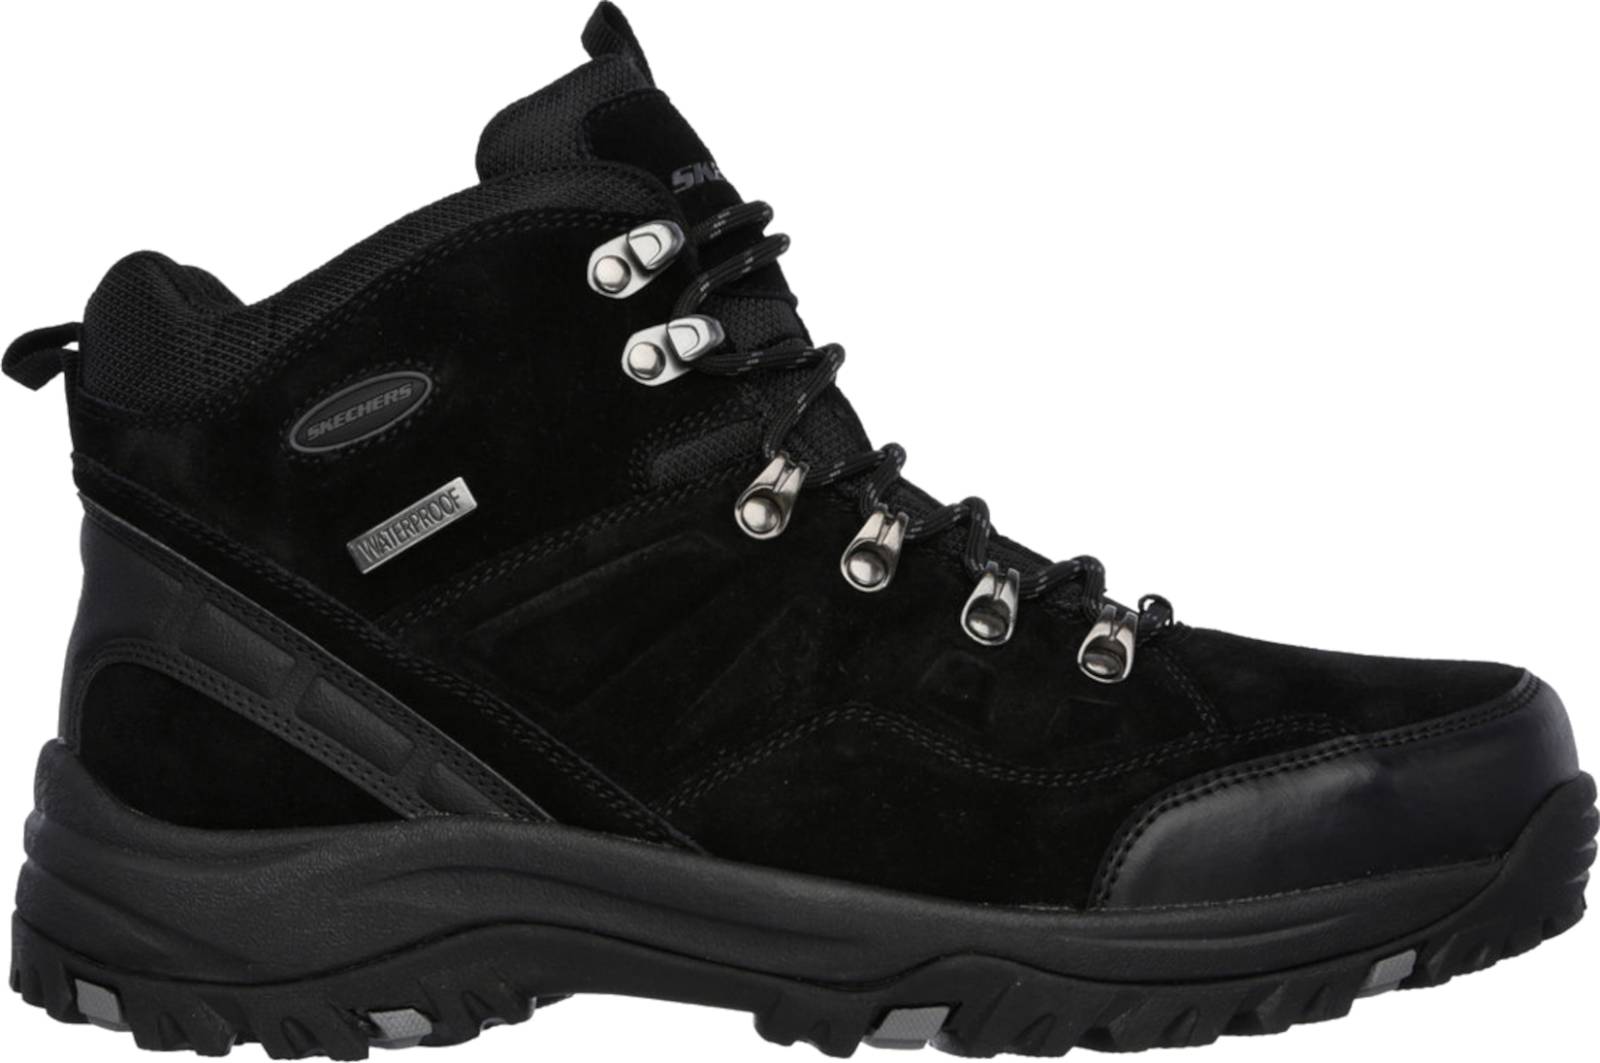 Skechers waterproof hiking boots: Save 